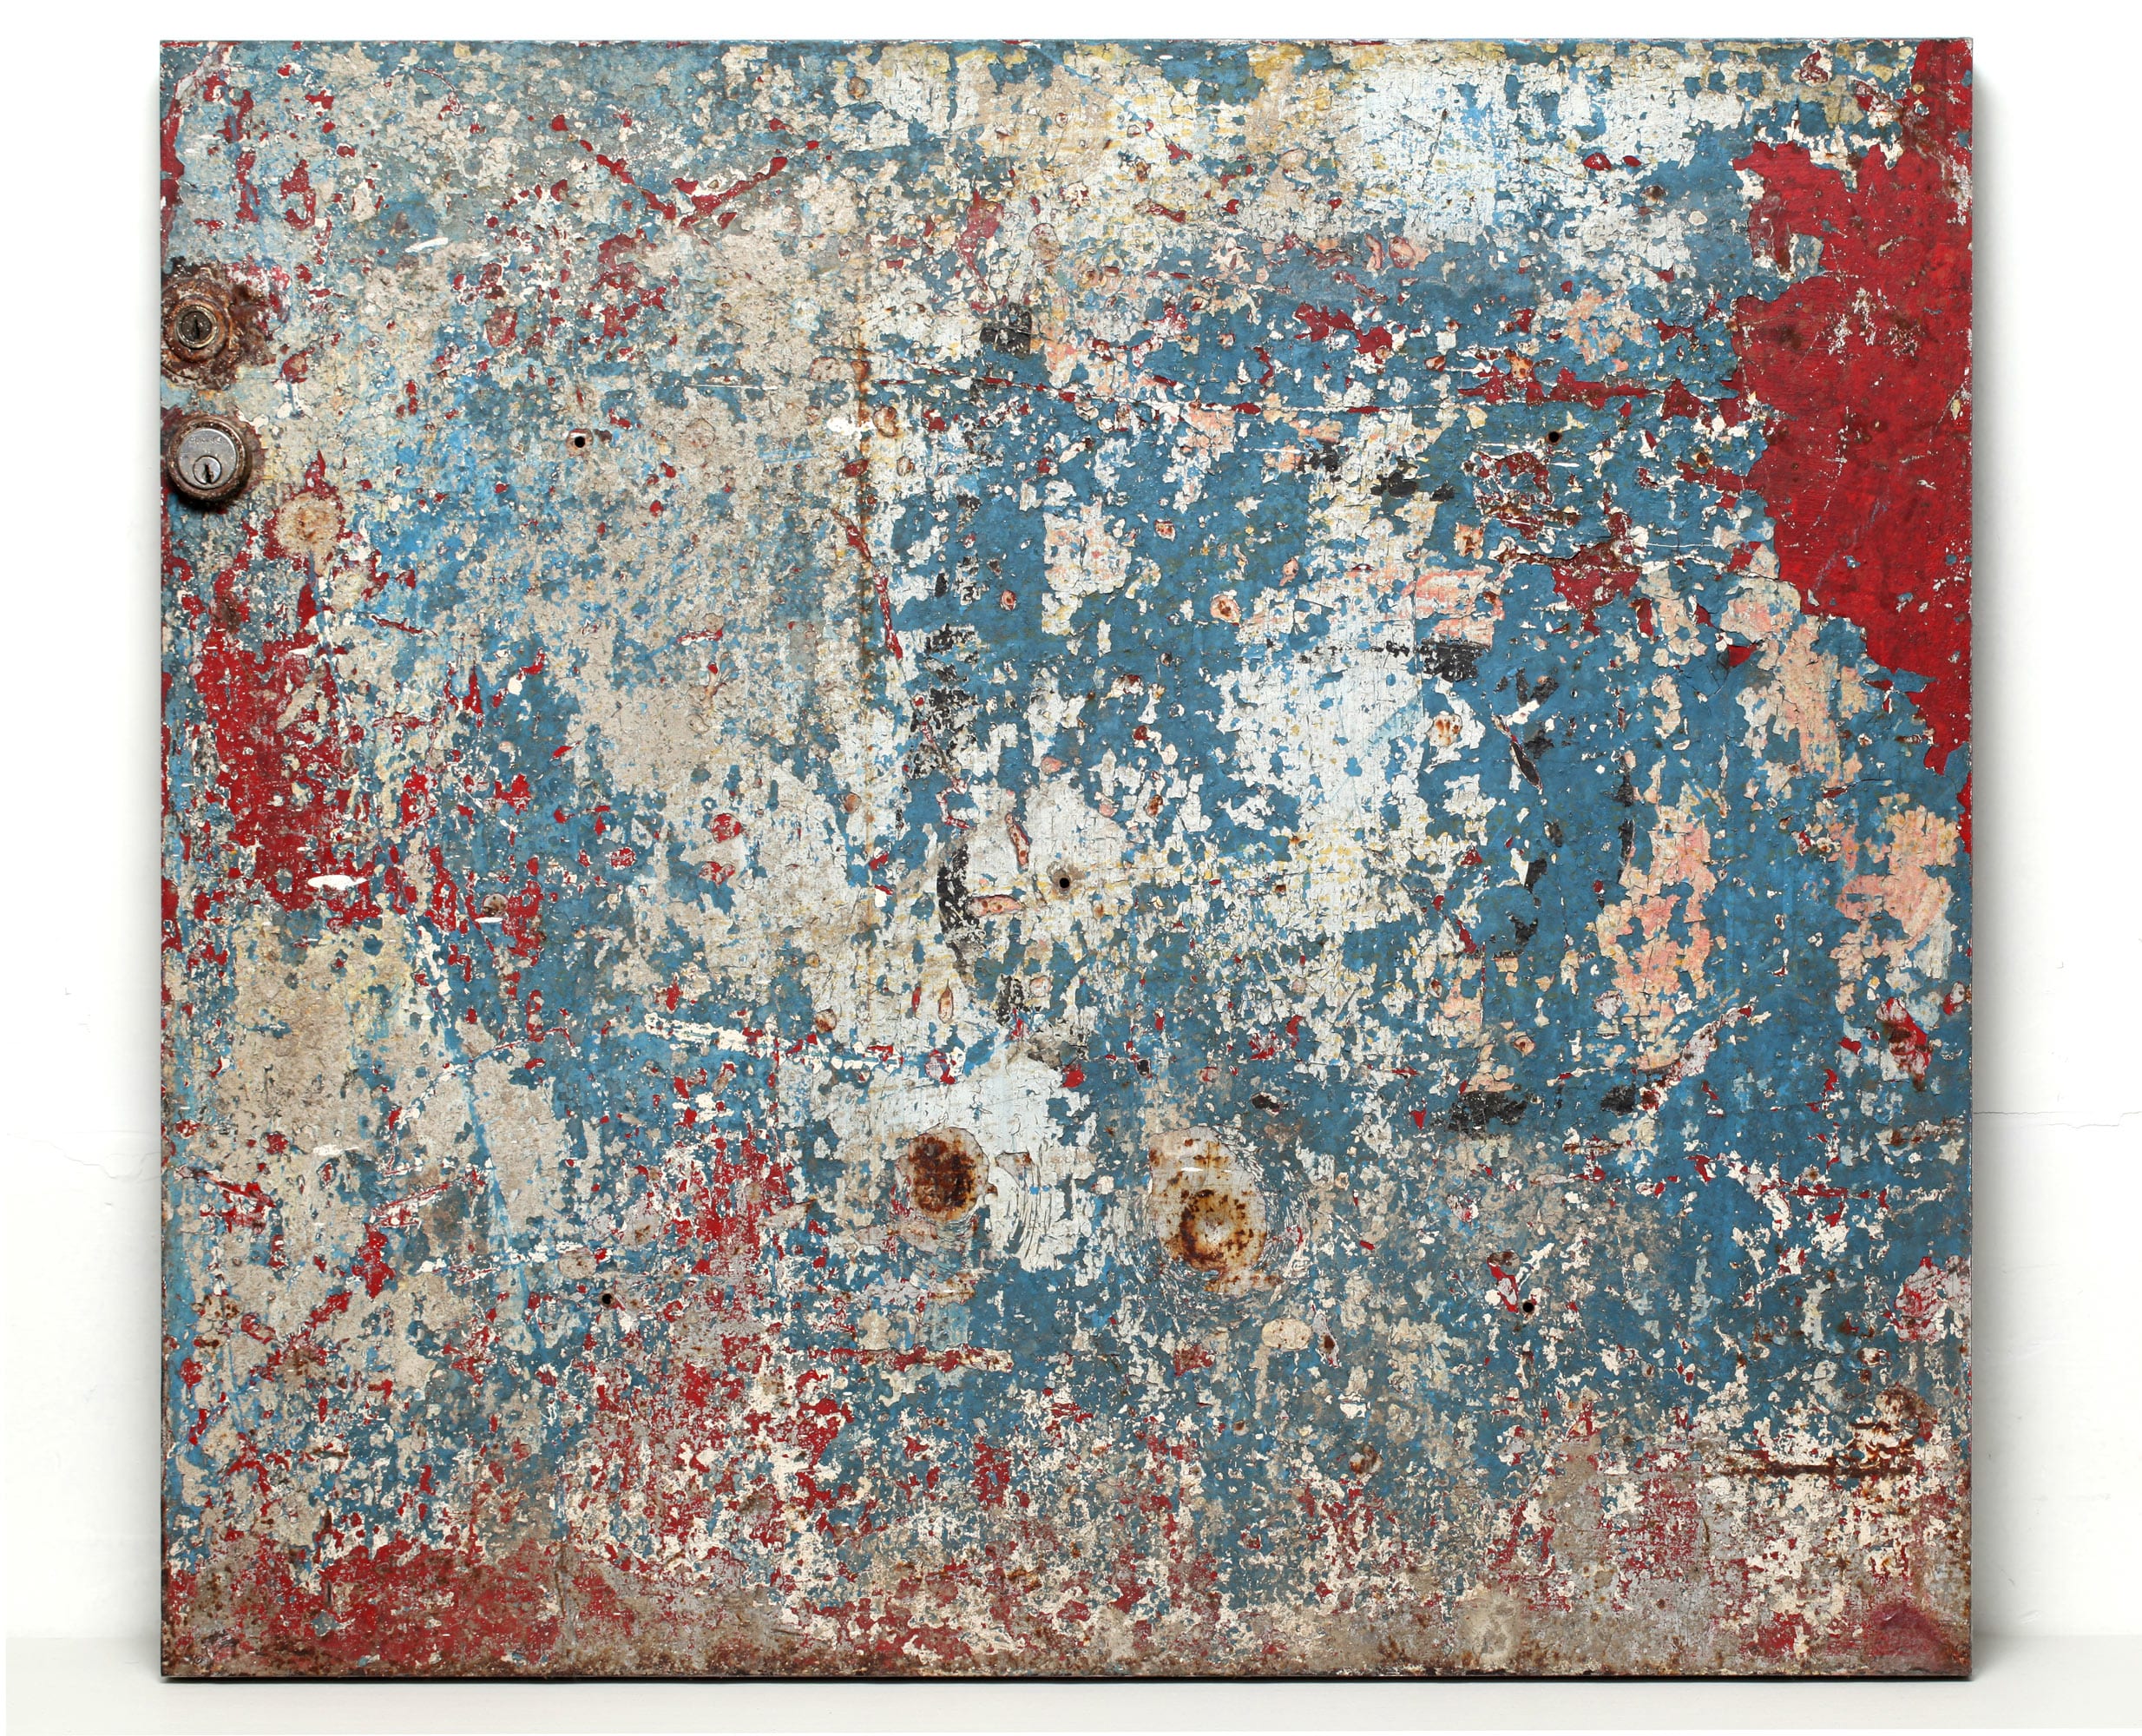 Gabriel de la Mora, Puerta I B de la series Puertas, pintura y mugre sobre lámina, 81.7 x 90.3 cm cada pieza, 2012. 